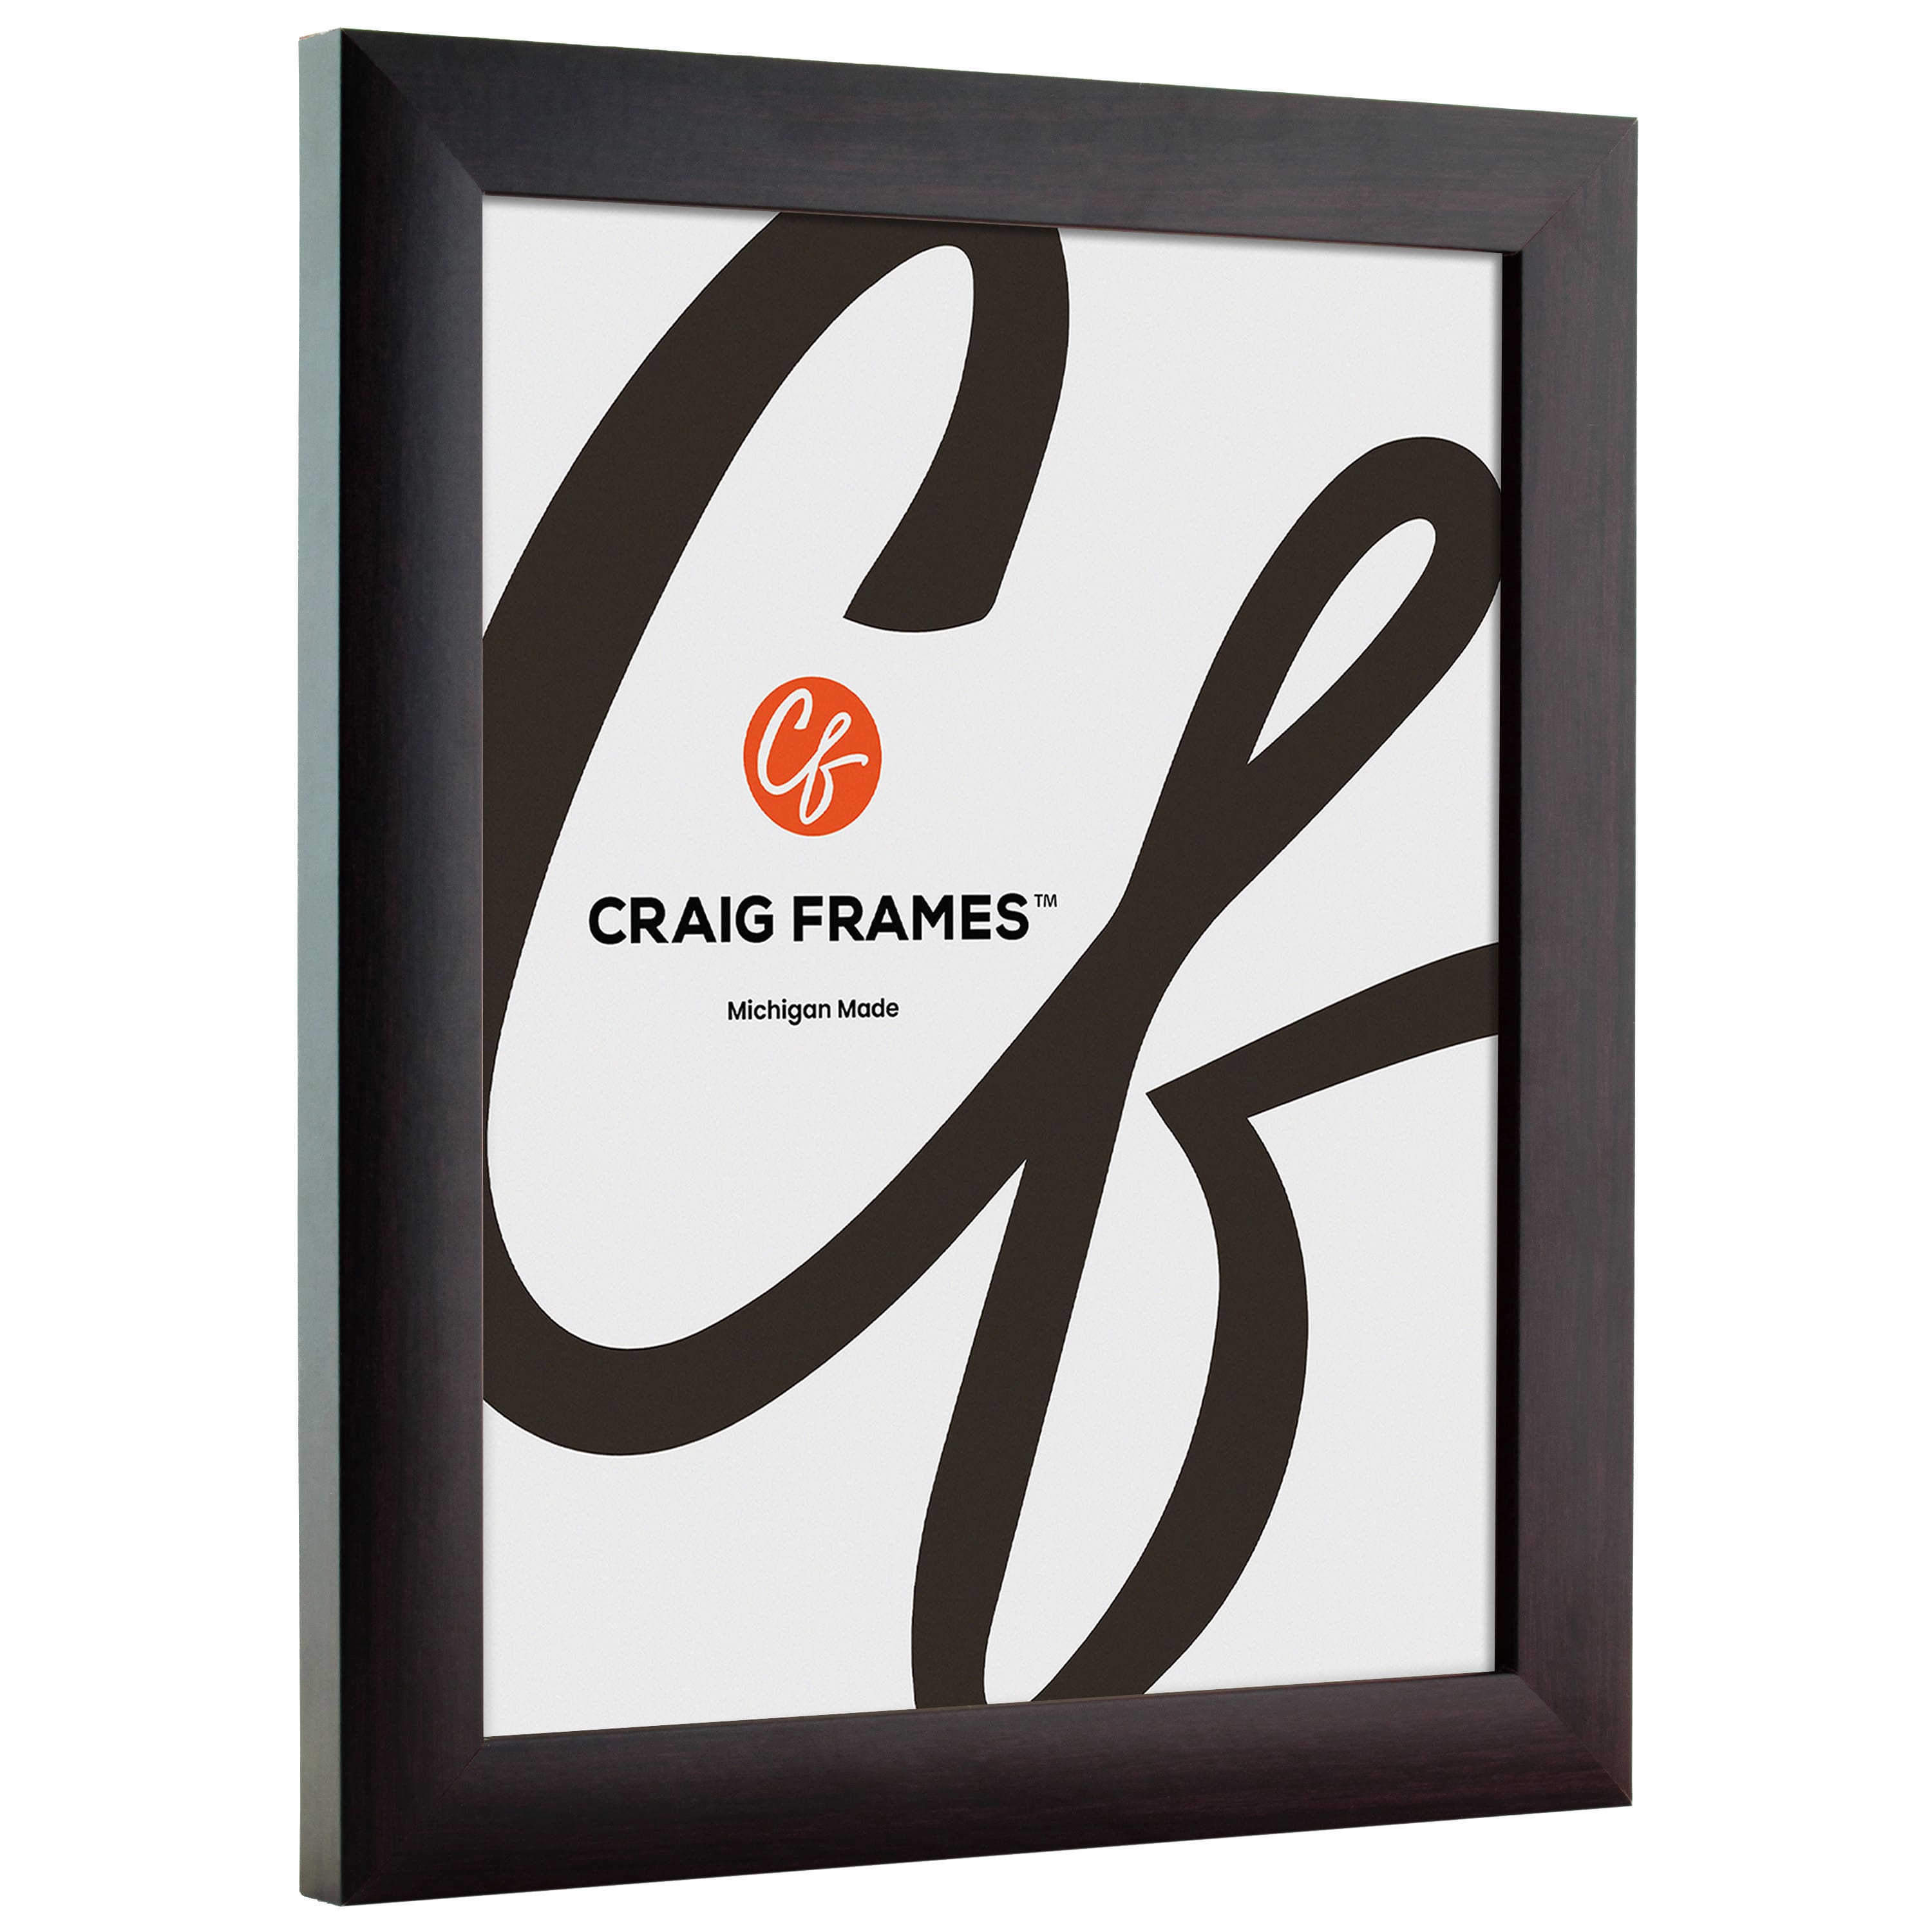 Craig Frames Contemporary Brazilian Walnut Picture Frame